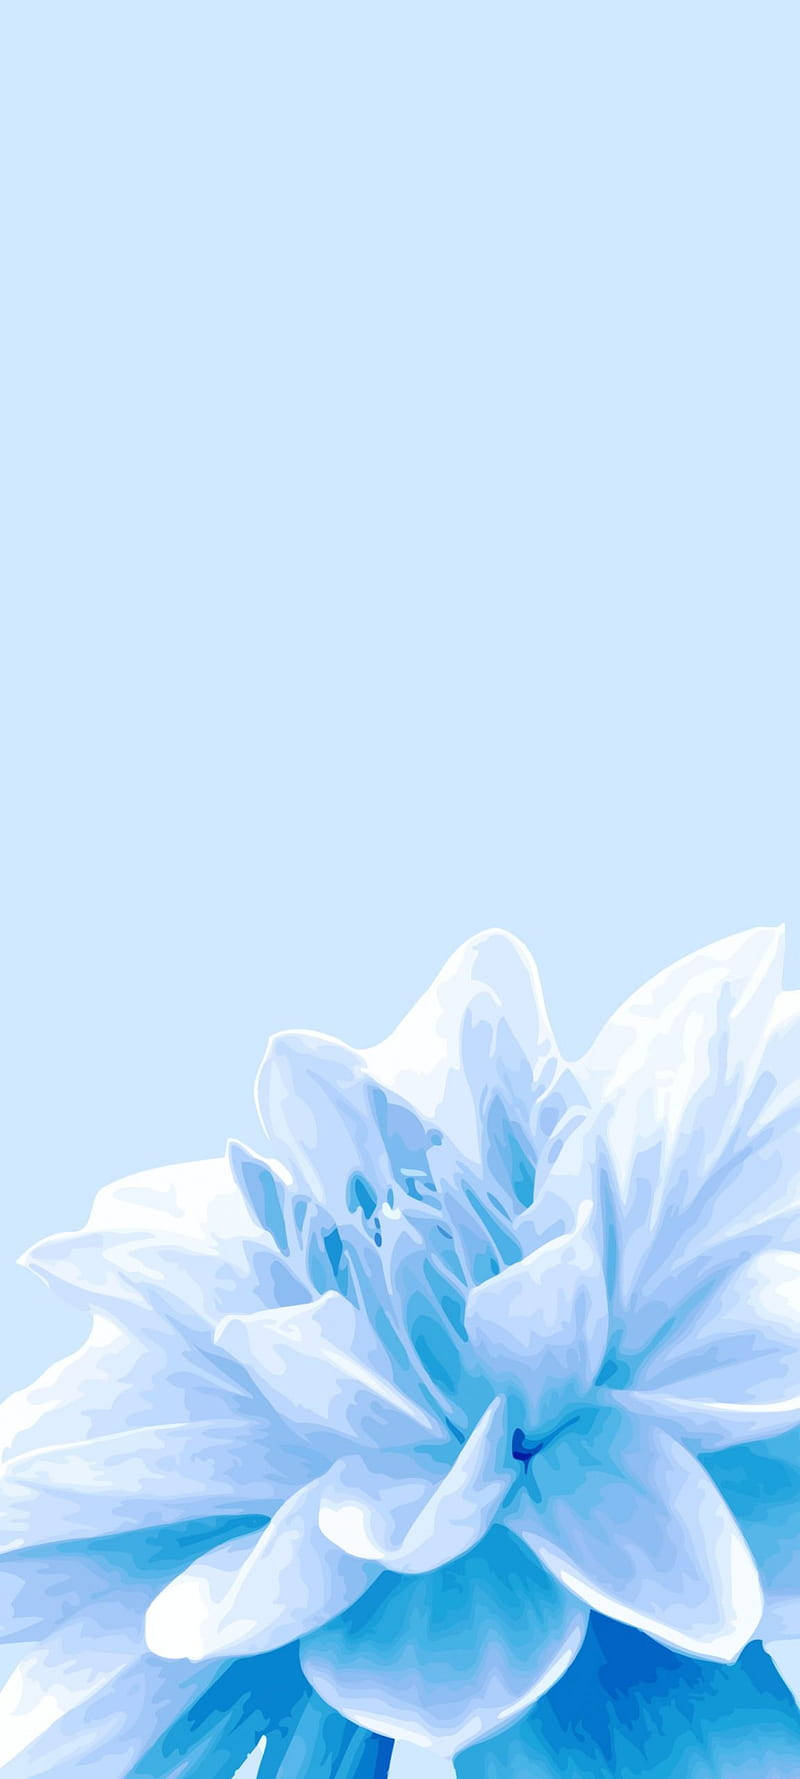 Vibrant 3d Flower Design On A Cute Blue Phone